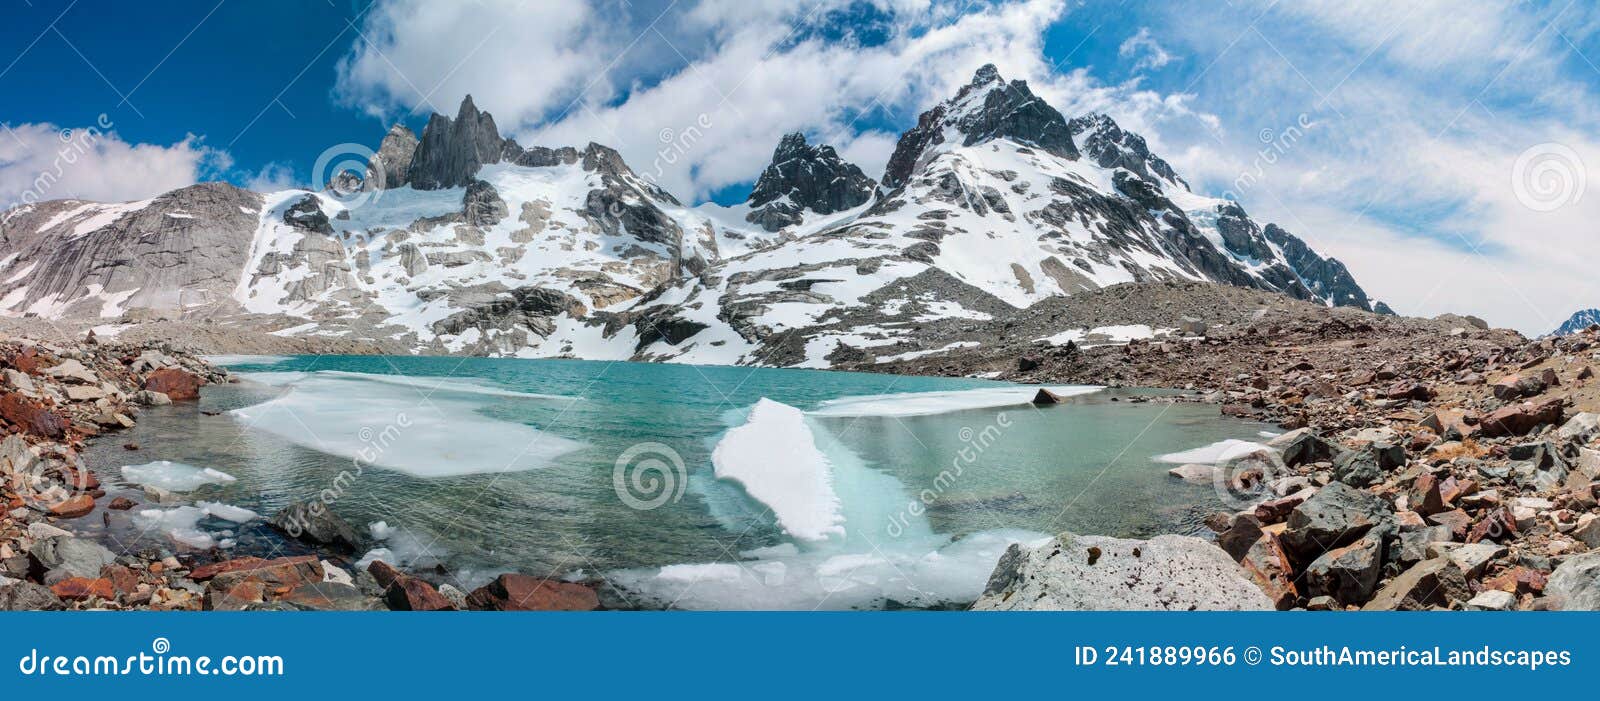 mountain peaks torres del avellano in patagonia, chile